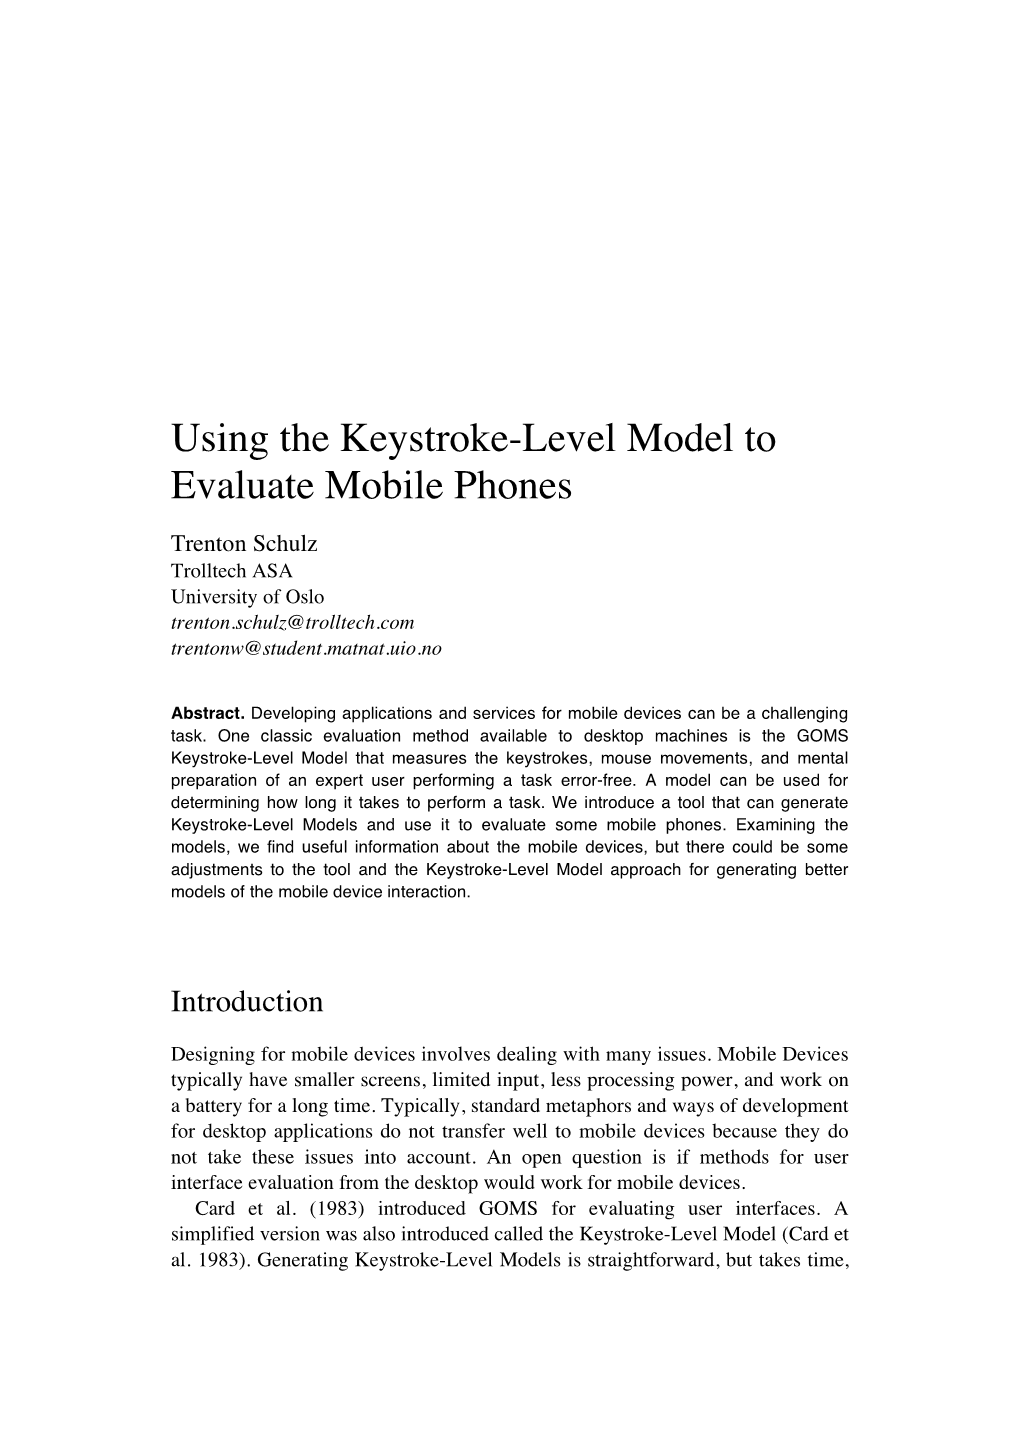 Using the Keystroke-Level Model to Evaluate Mobile Phones